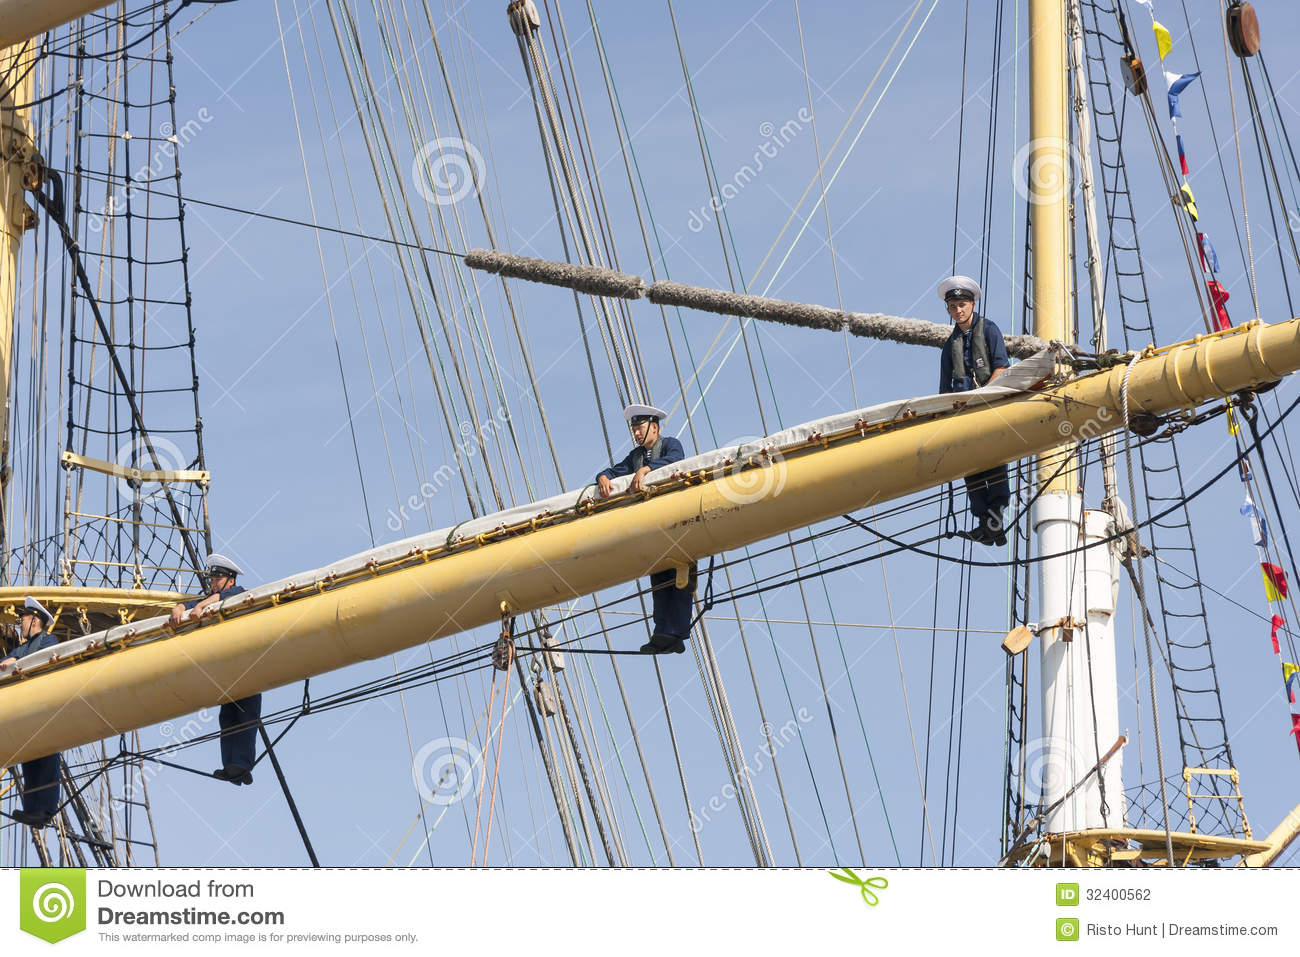   Kruzenshtern Or Krusenstern Ship Stand On Sail Masts While The Ship    